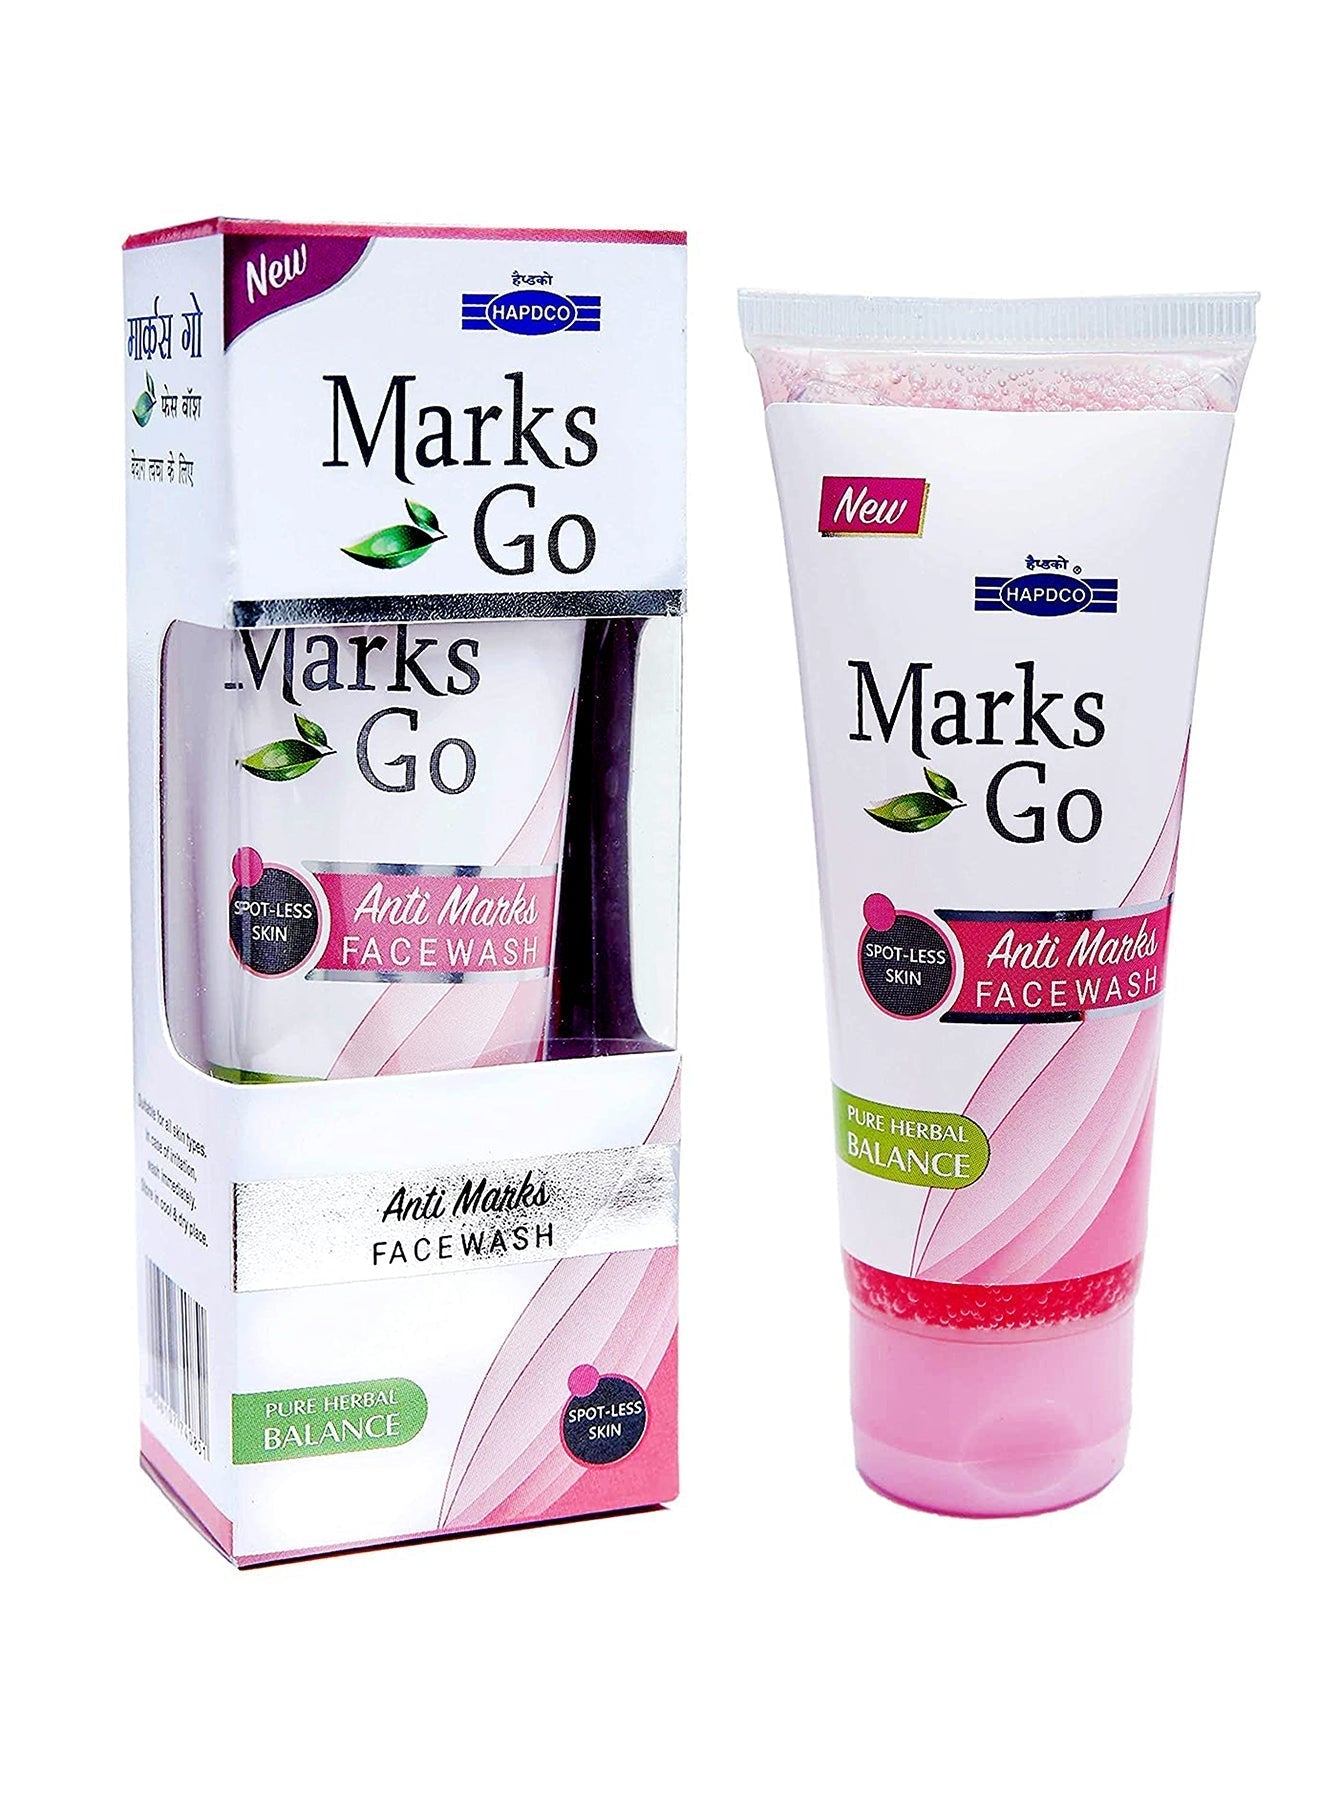 Anti Marks Facewash 65ml Value Pack of 12 